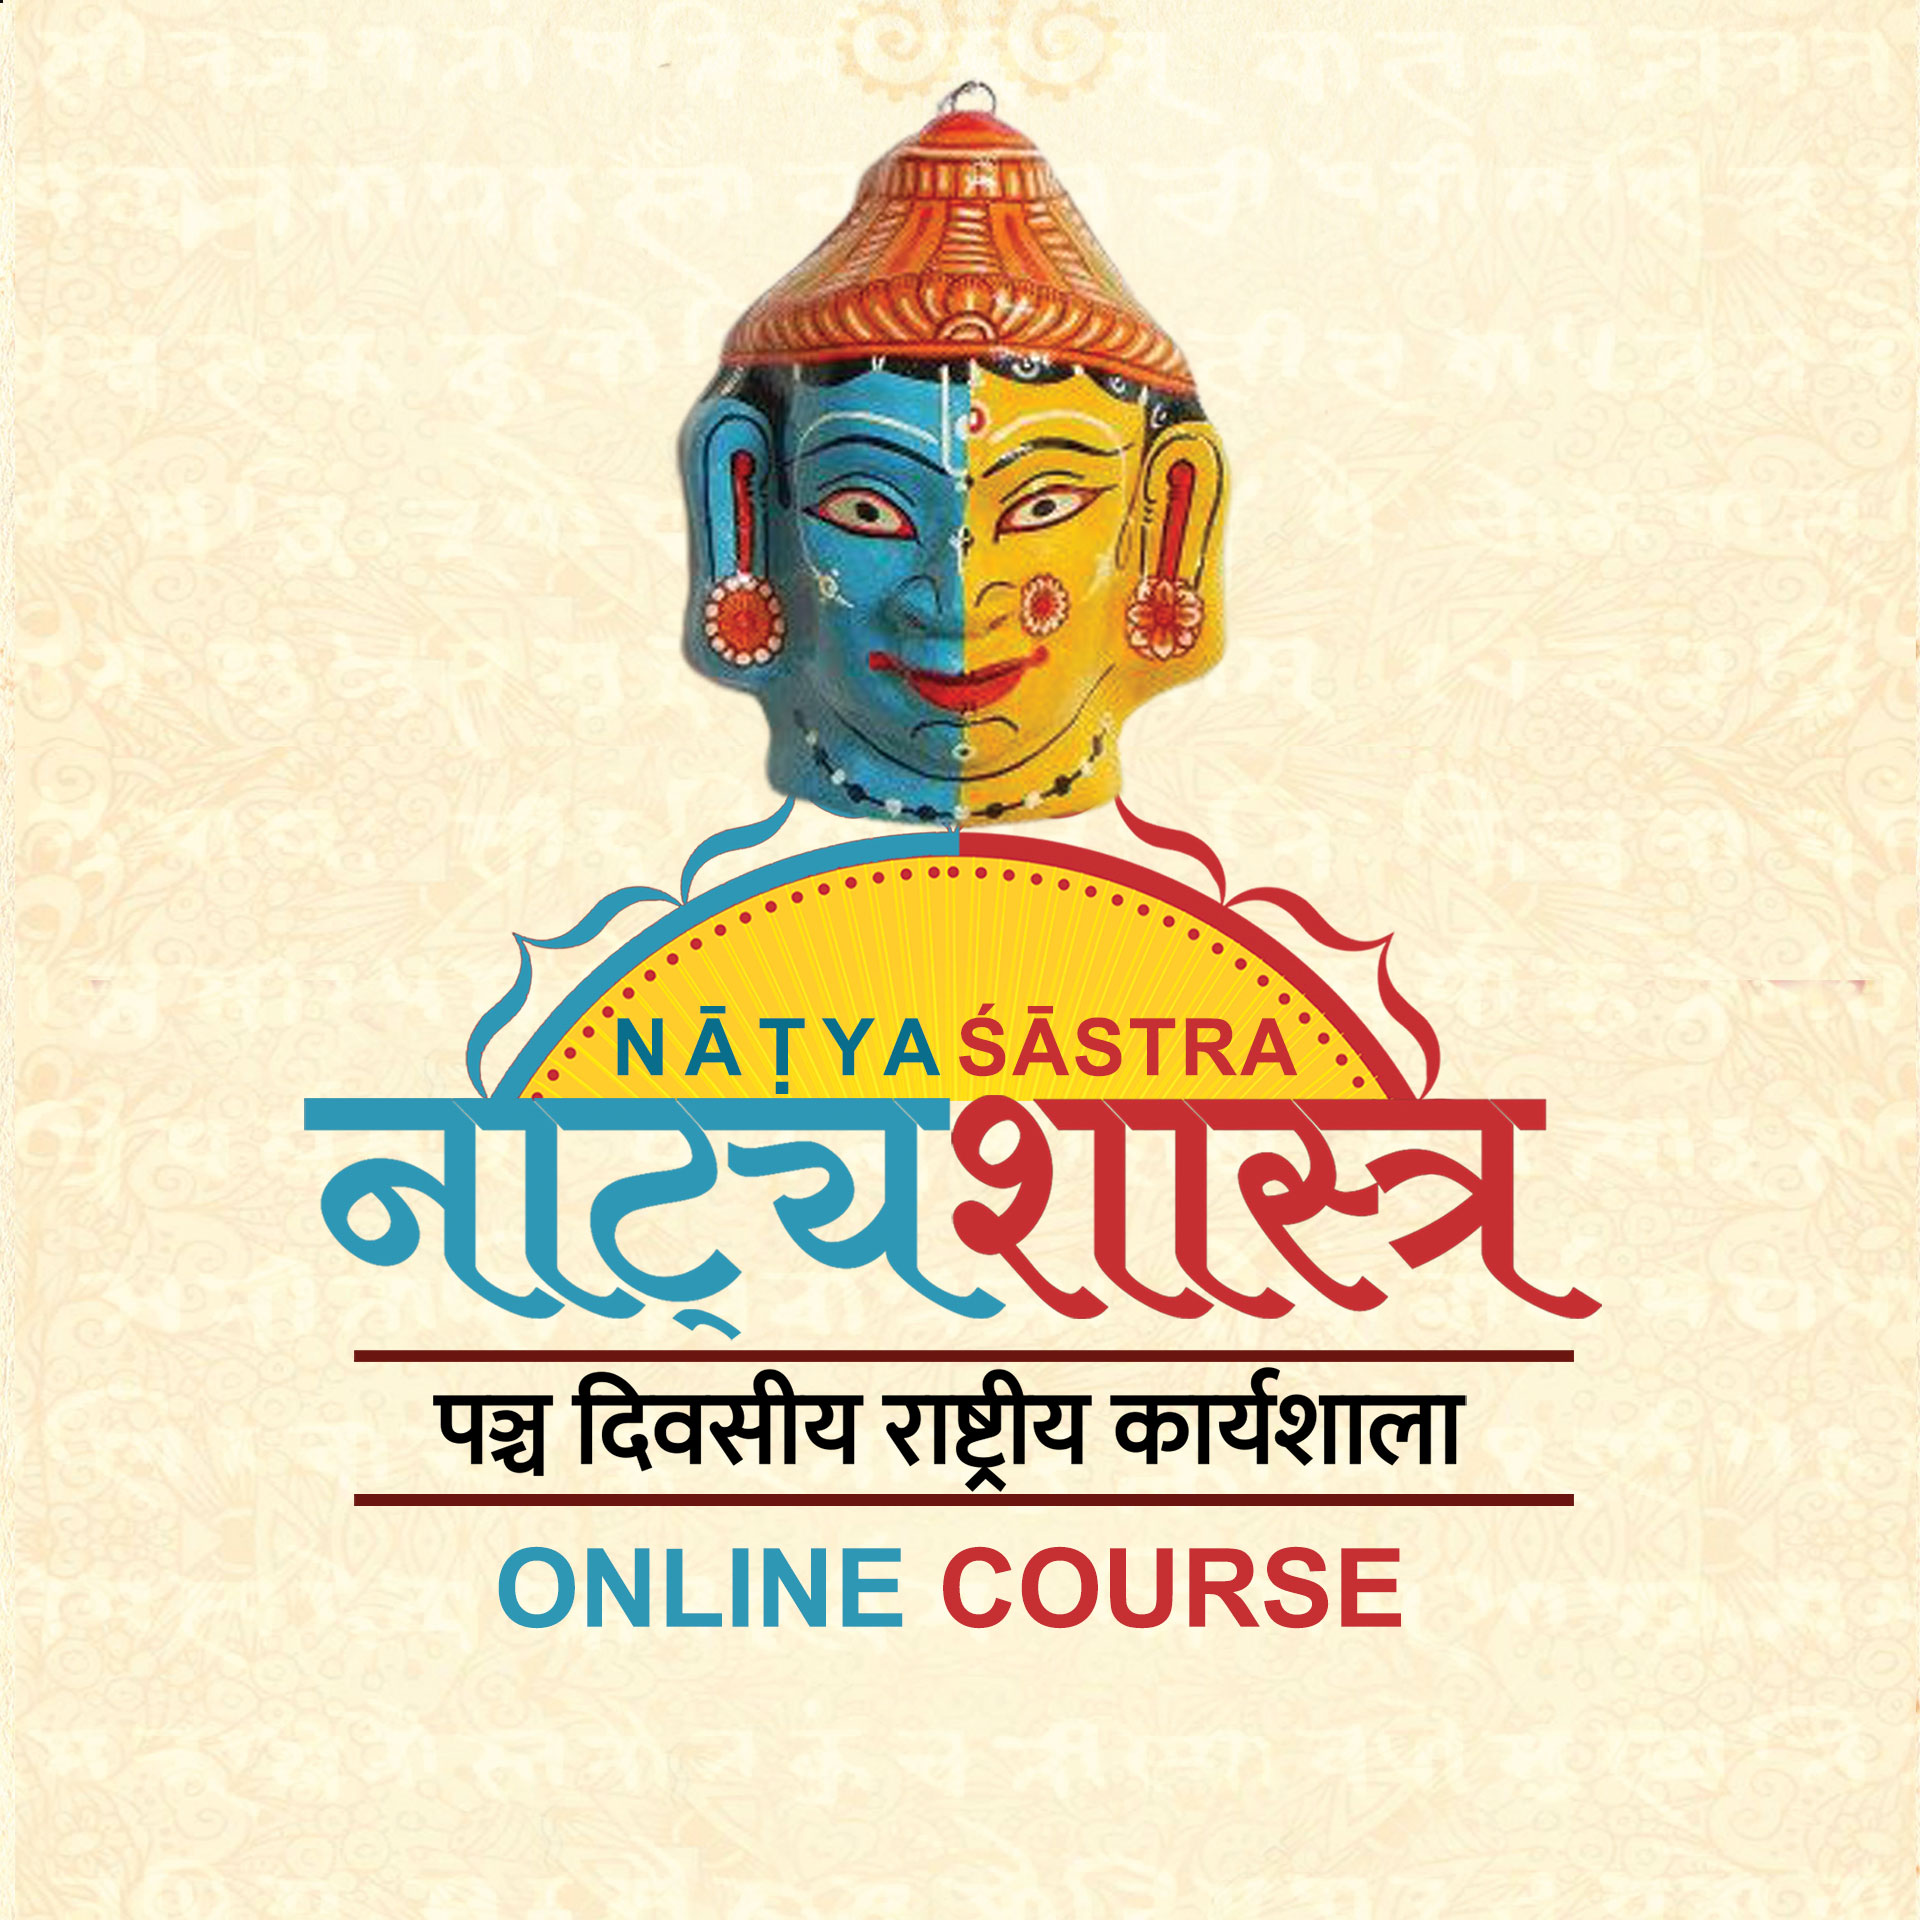 नाट्यशास्त्र – पञ्च दिवसीय राष्ट्रीय कार्यशाला – National Workshop on Natyashatra